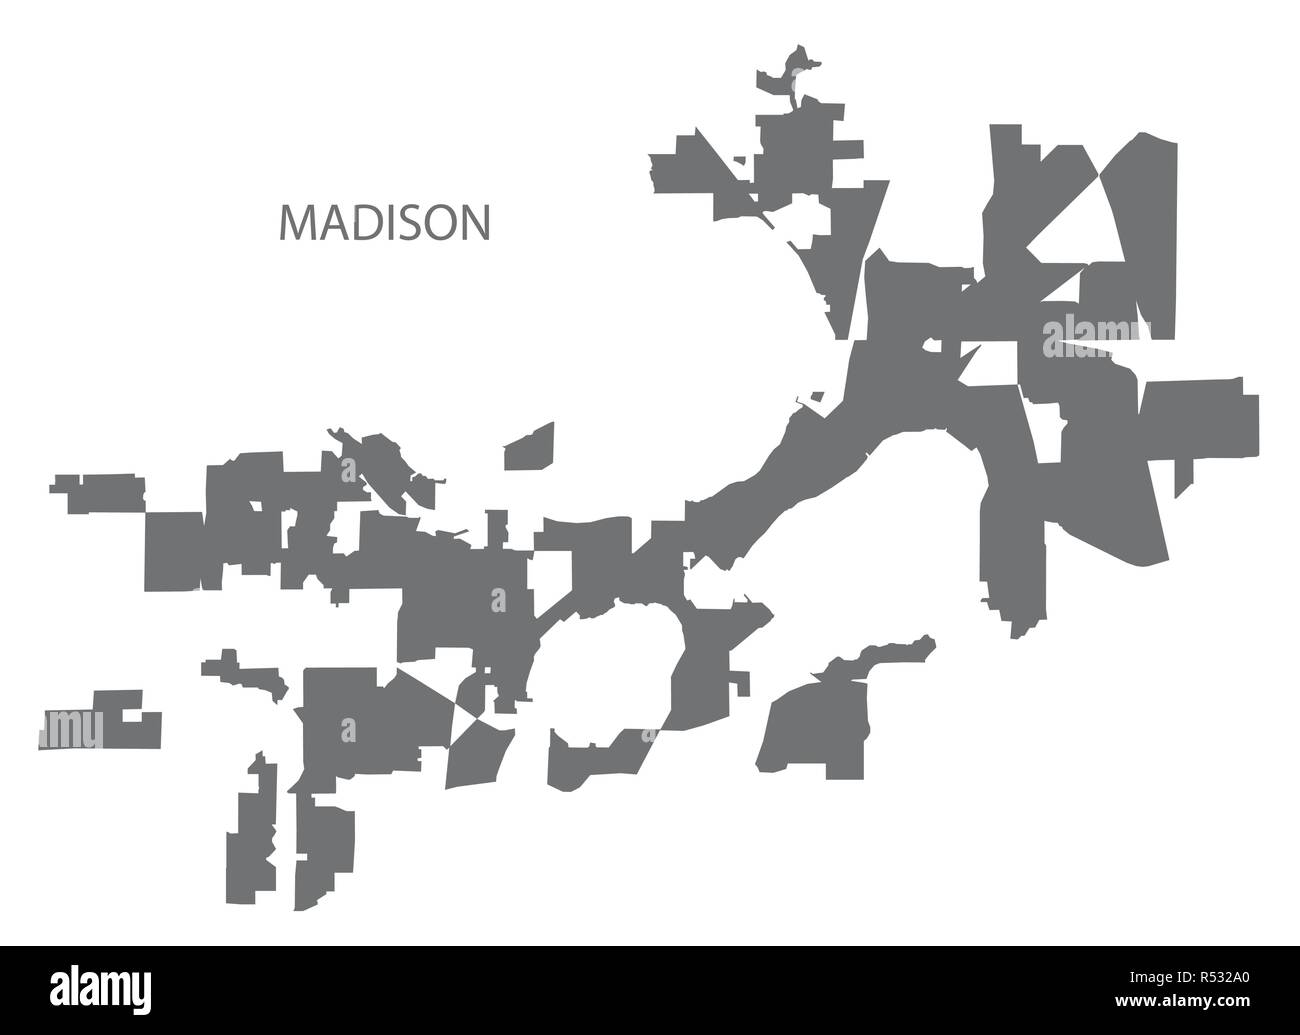 Madison Wisconsin city map grey illustration silhouette shape Stock Vector